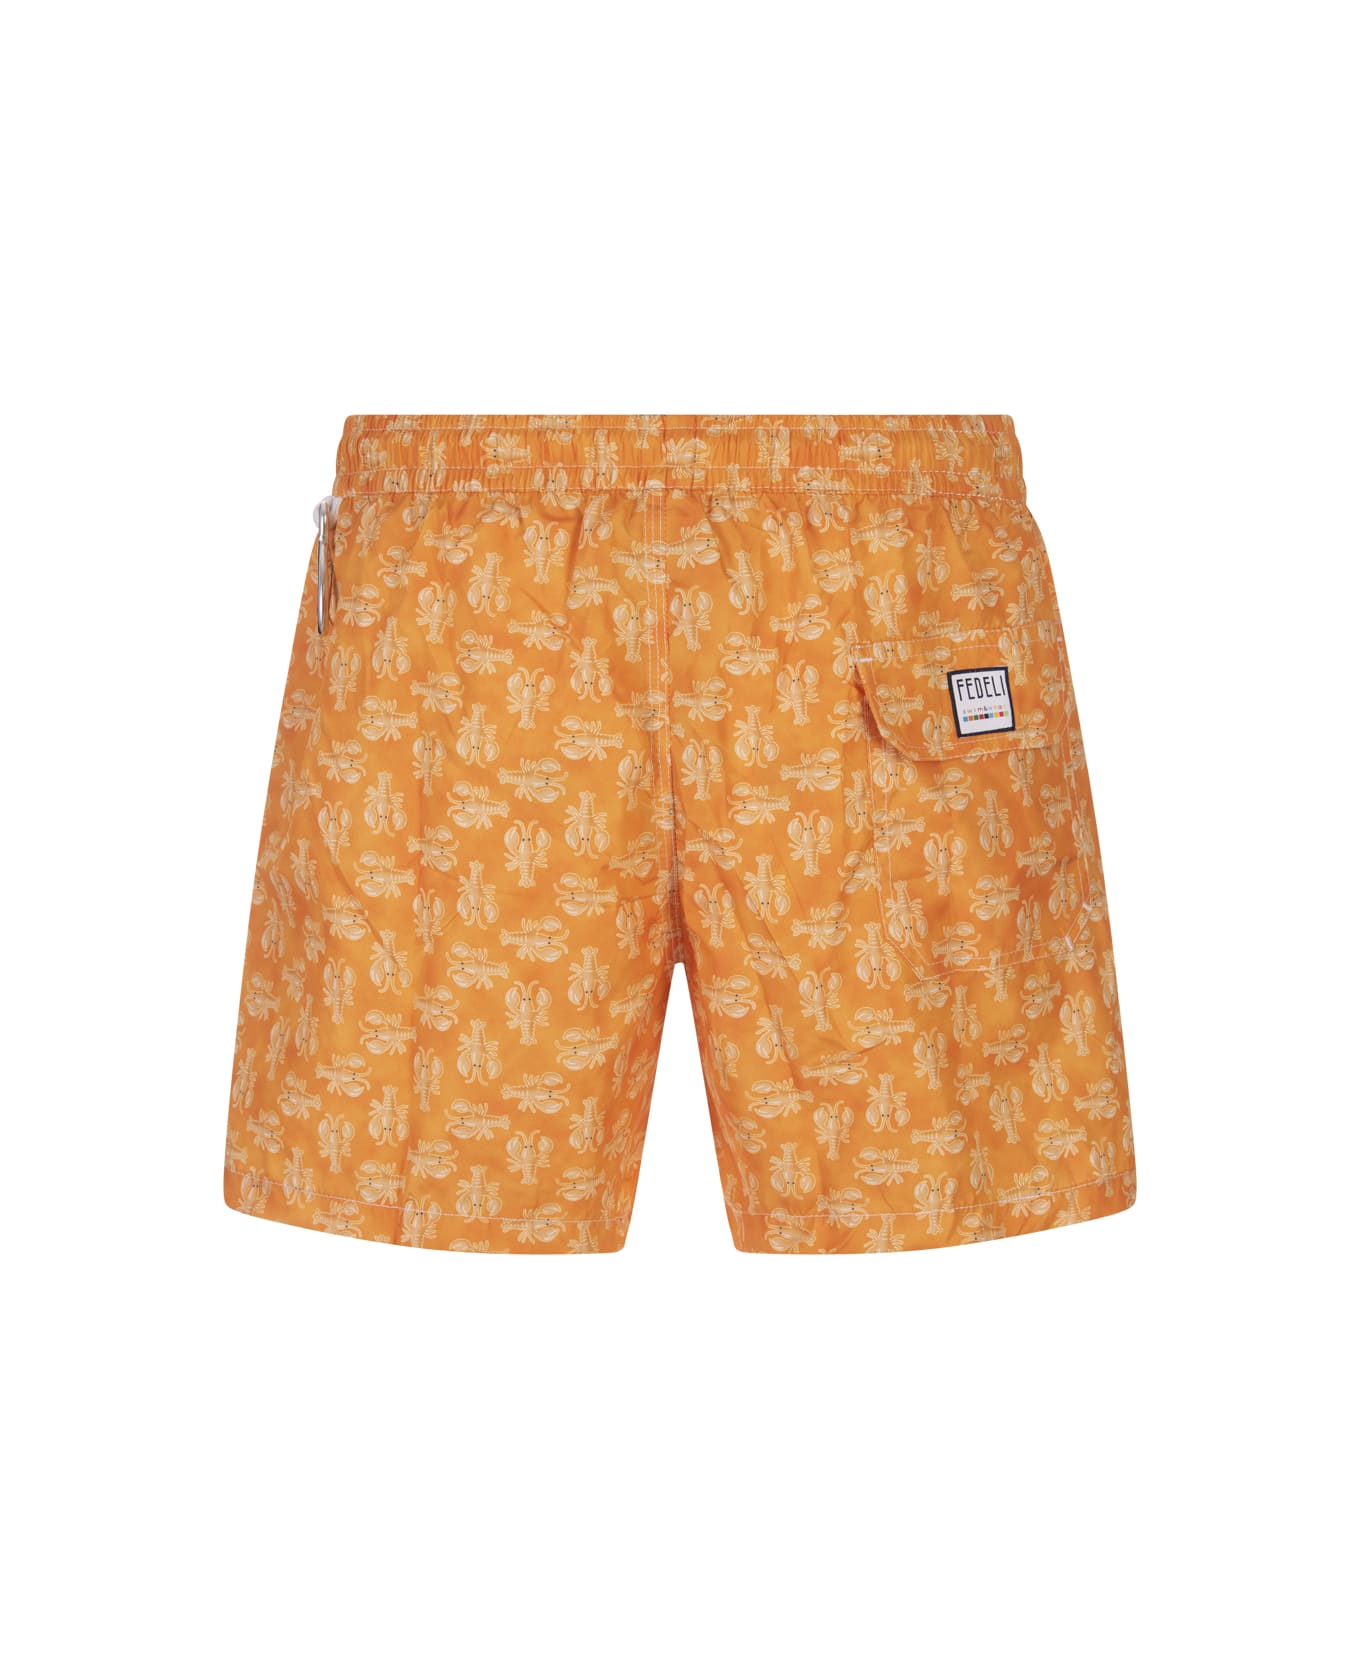 Fedeli Orange Swim Shorts With Lobster Pattern - Orange